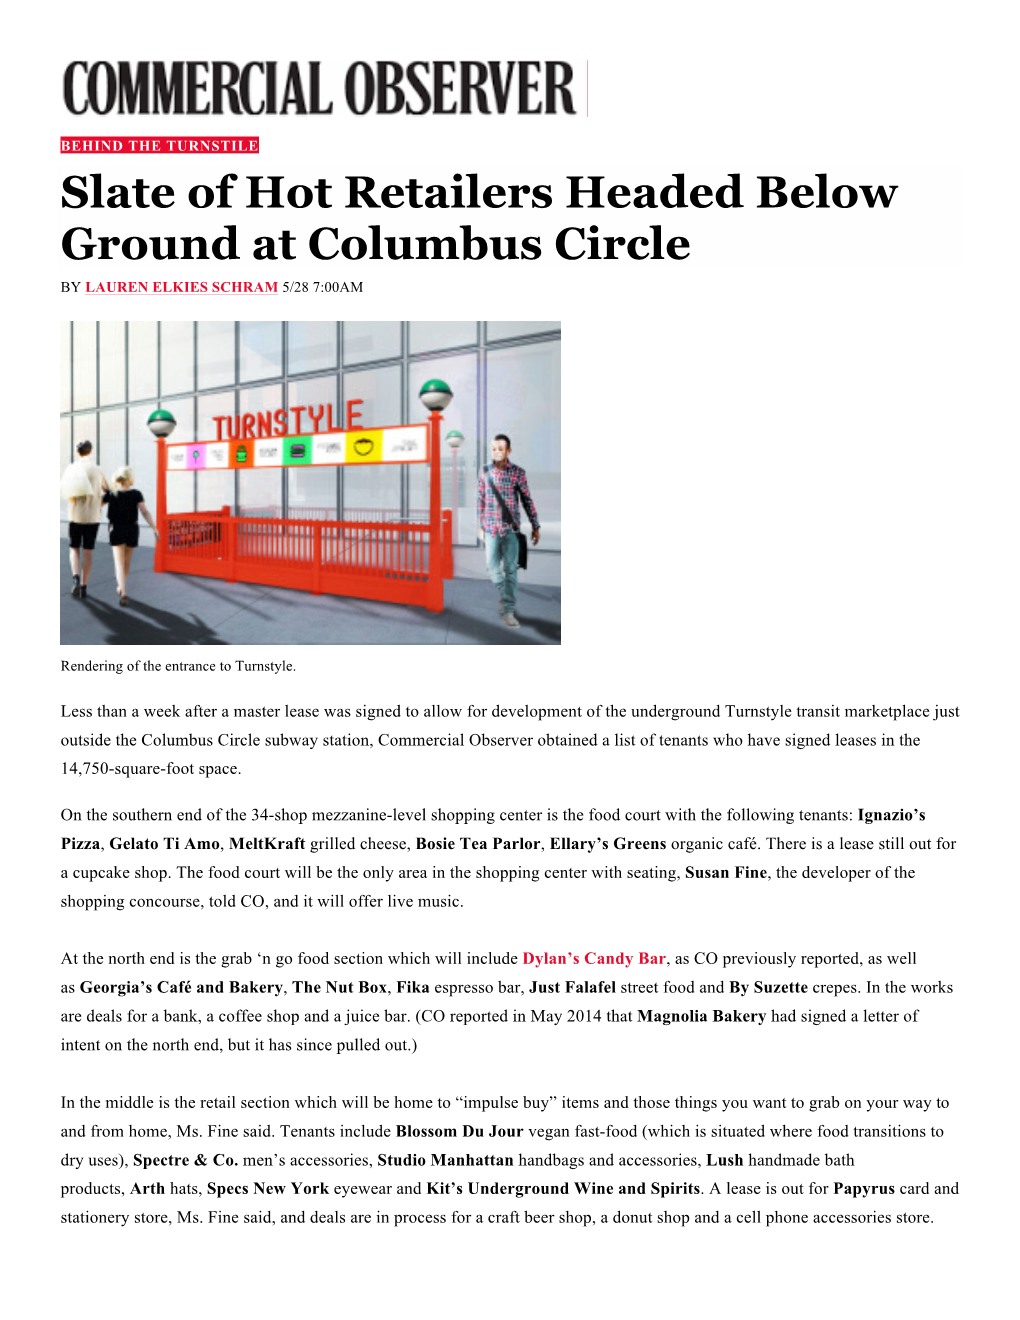 Slate of Hot Retailers Headed Below Ground at Columbus Circle by LAUREN ELKIES SCHRAM 5/28 7:00AM